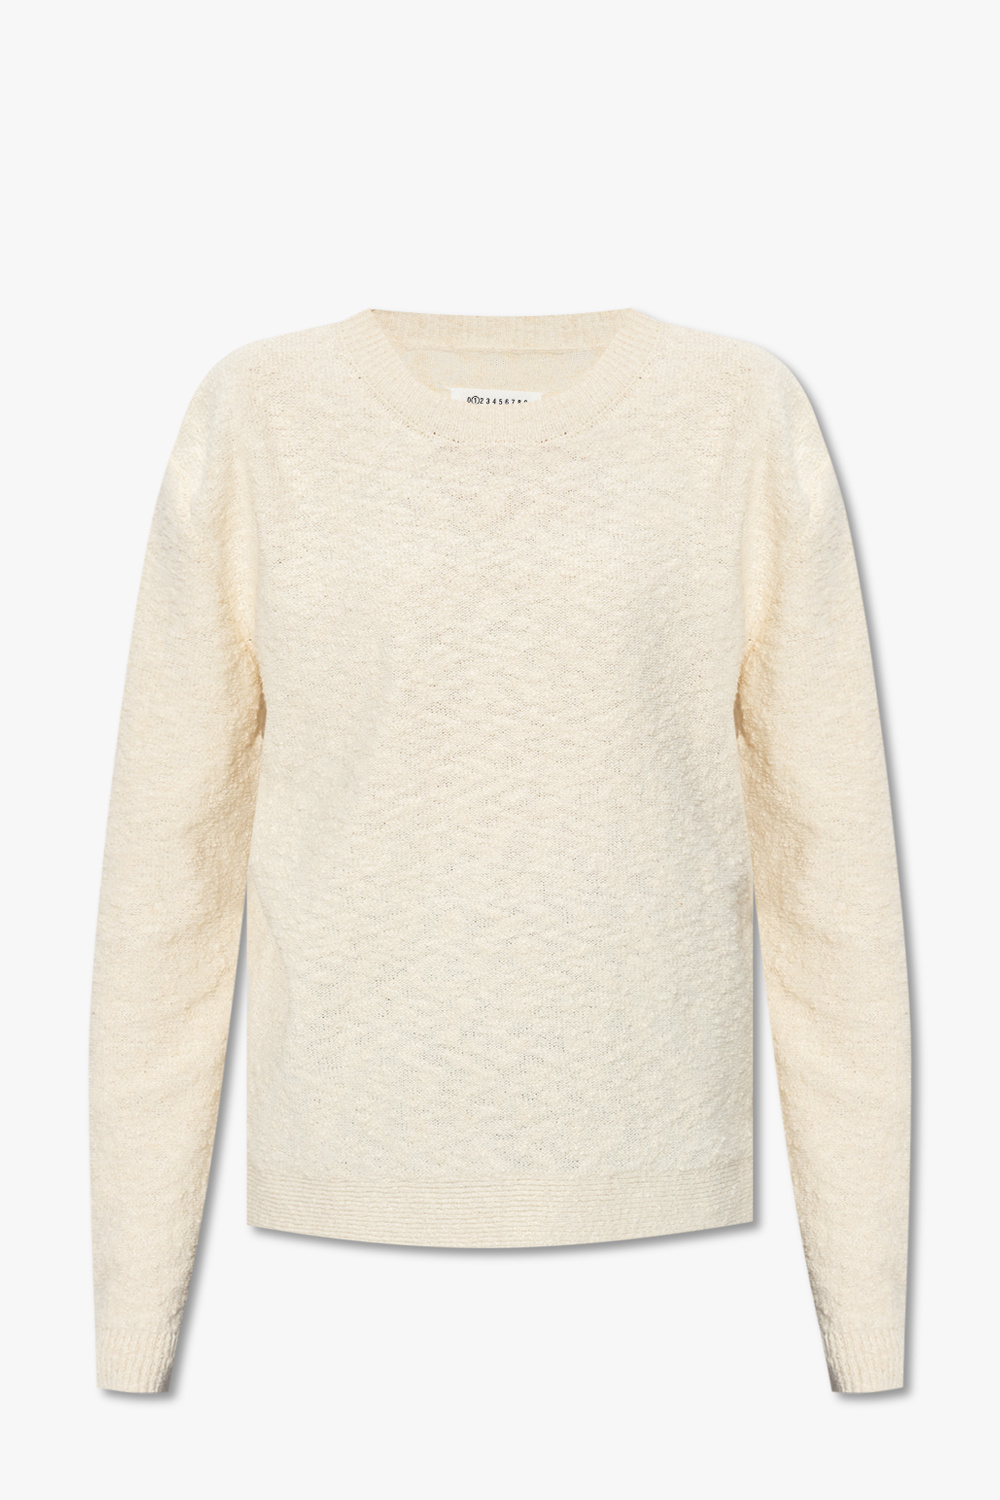 Maison Margiela Cotton sweater